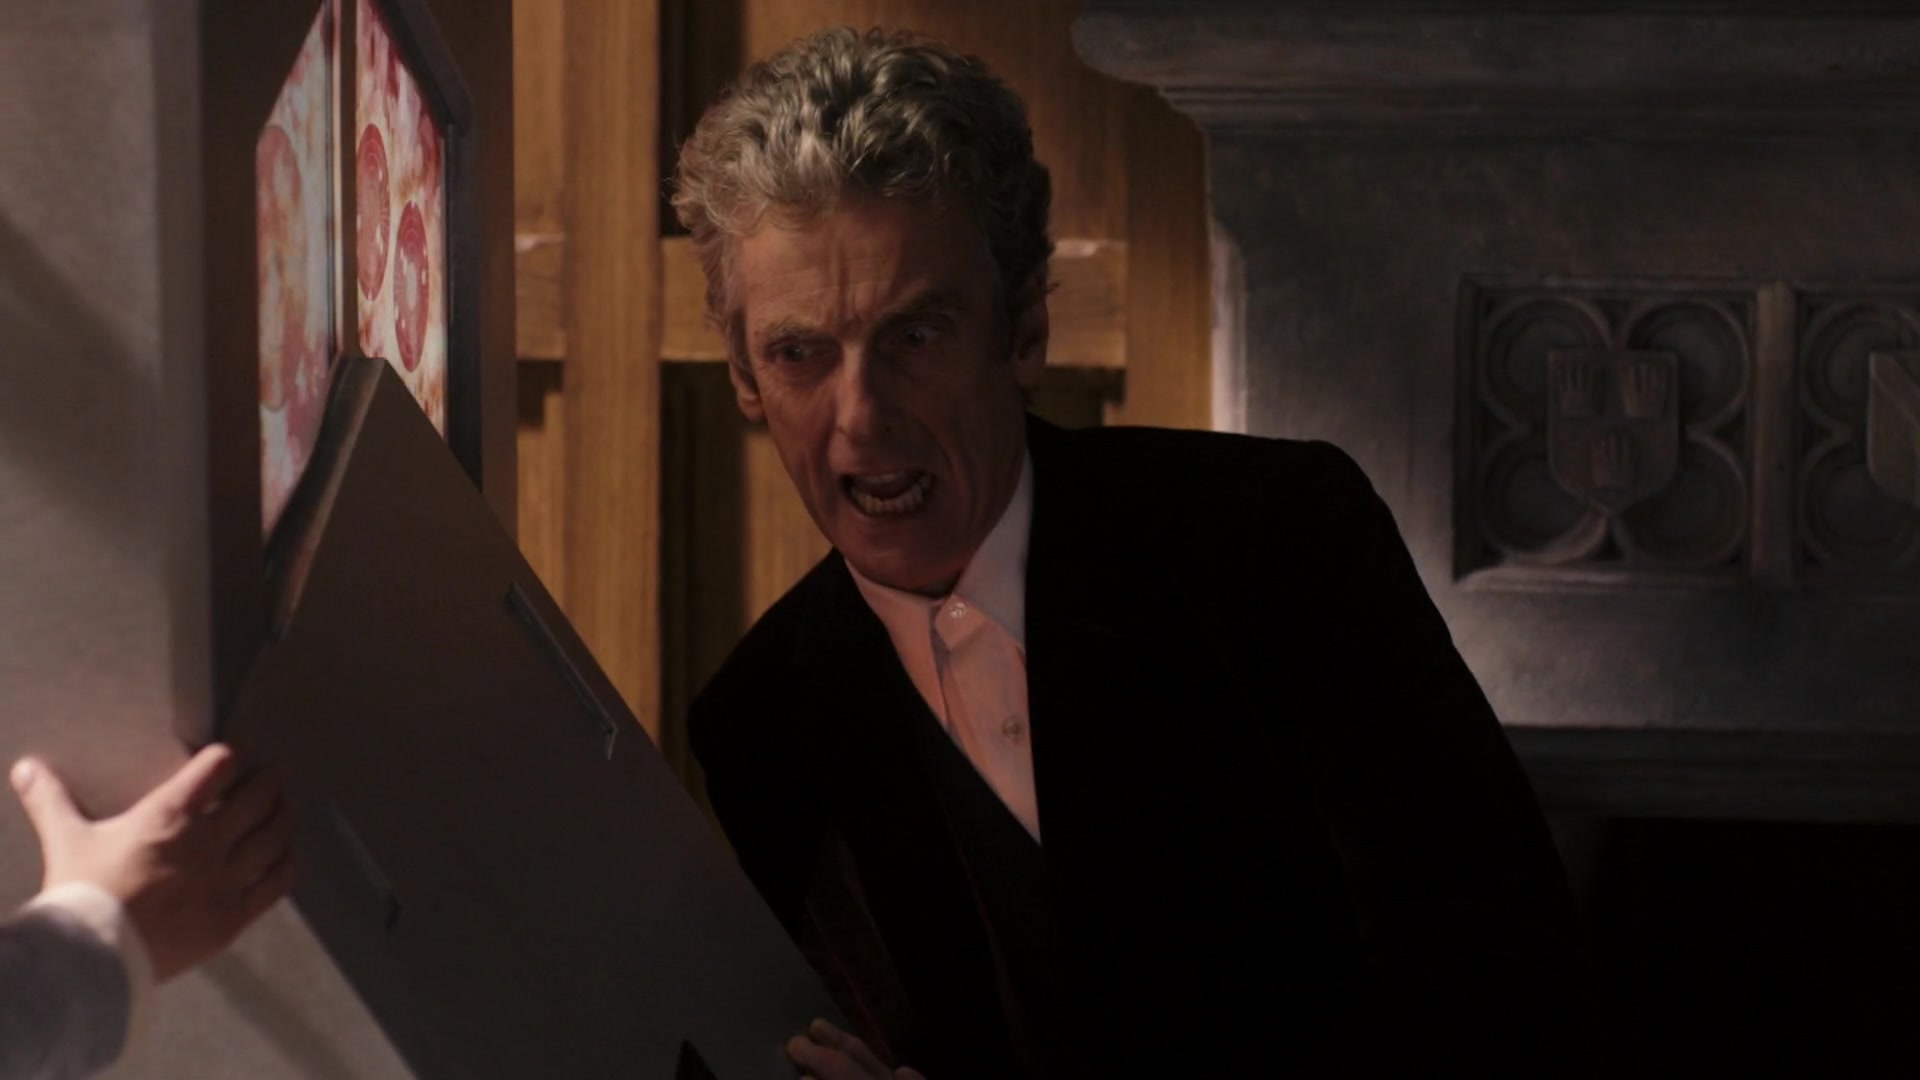 Doctor_Who_9x10-Sleep_No_More_0690.jpg